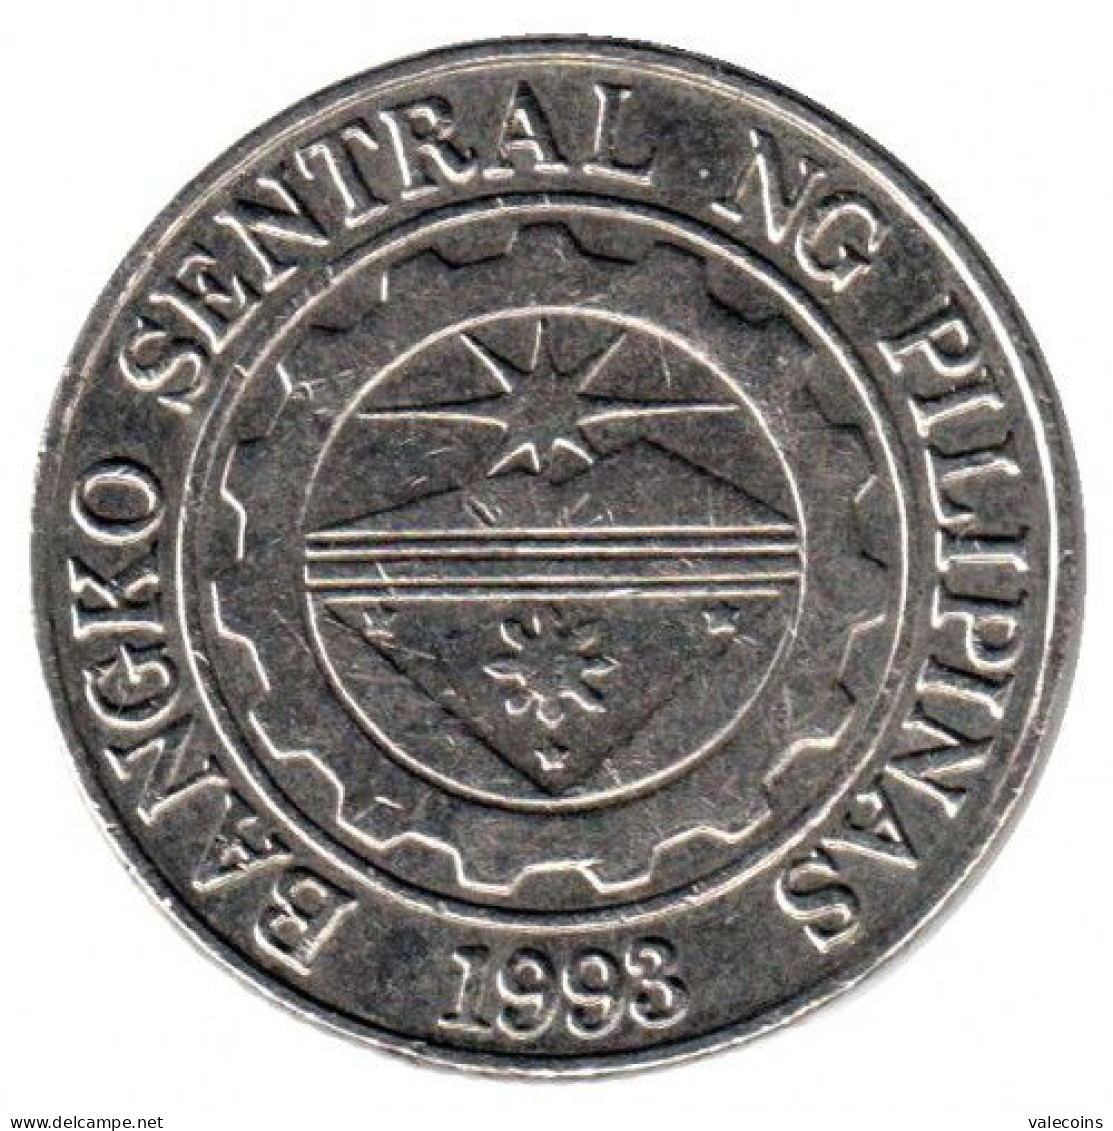 FILIPPINE PILIPINAS PHILIPPINES - 1997 - 1 Piso - KM 269 - Coin UNC - Philippinen